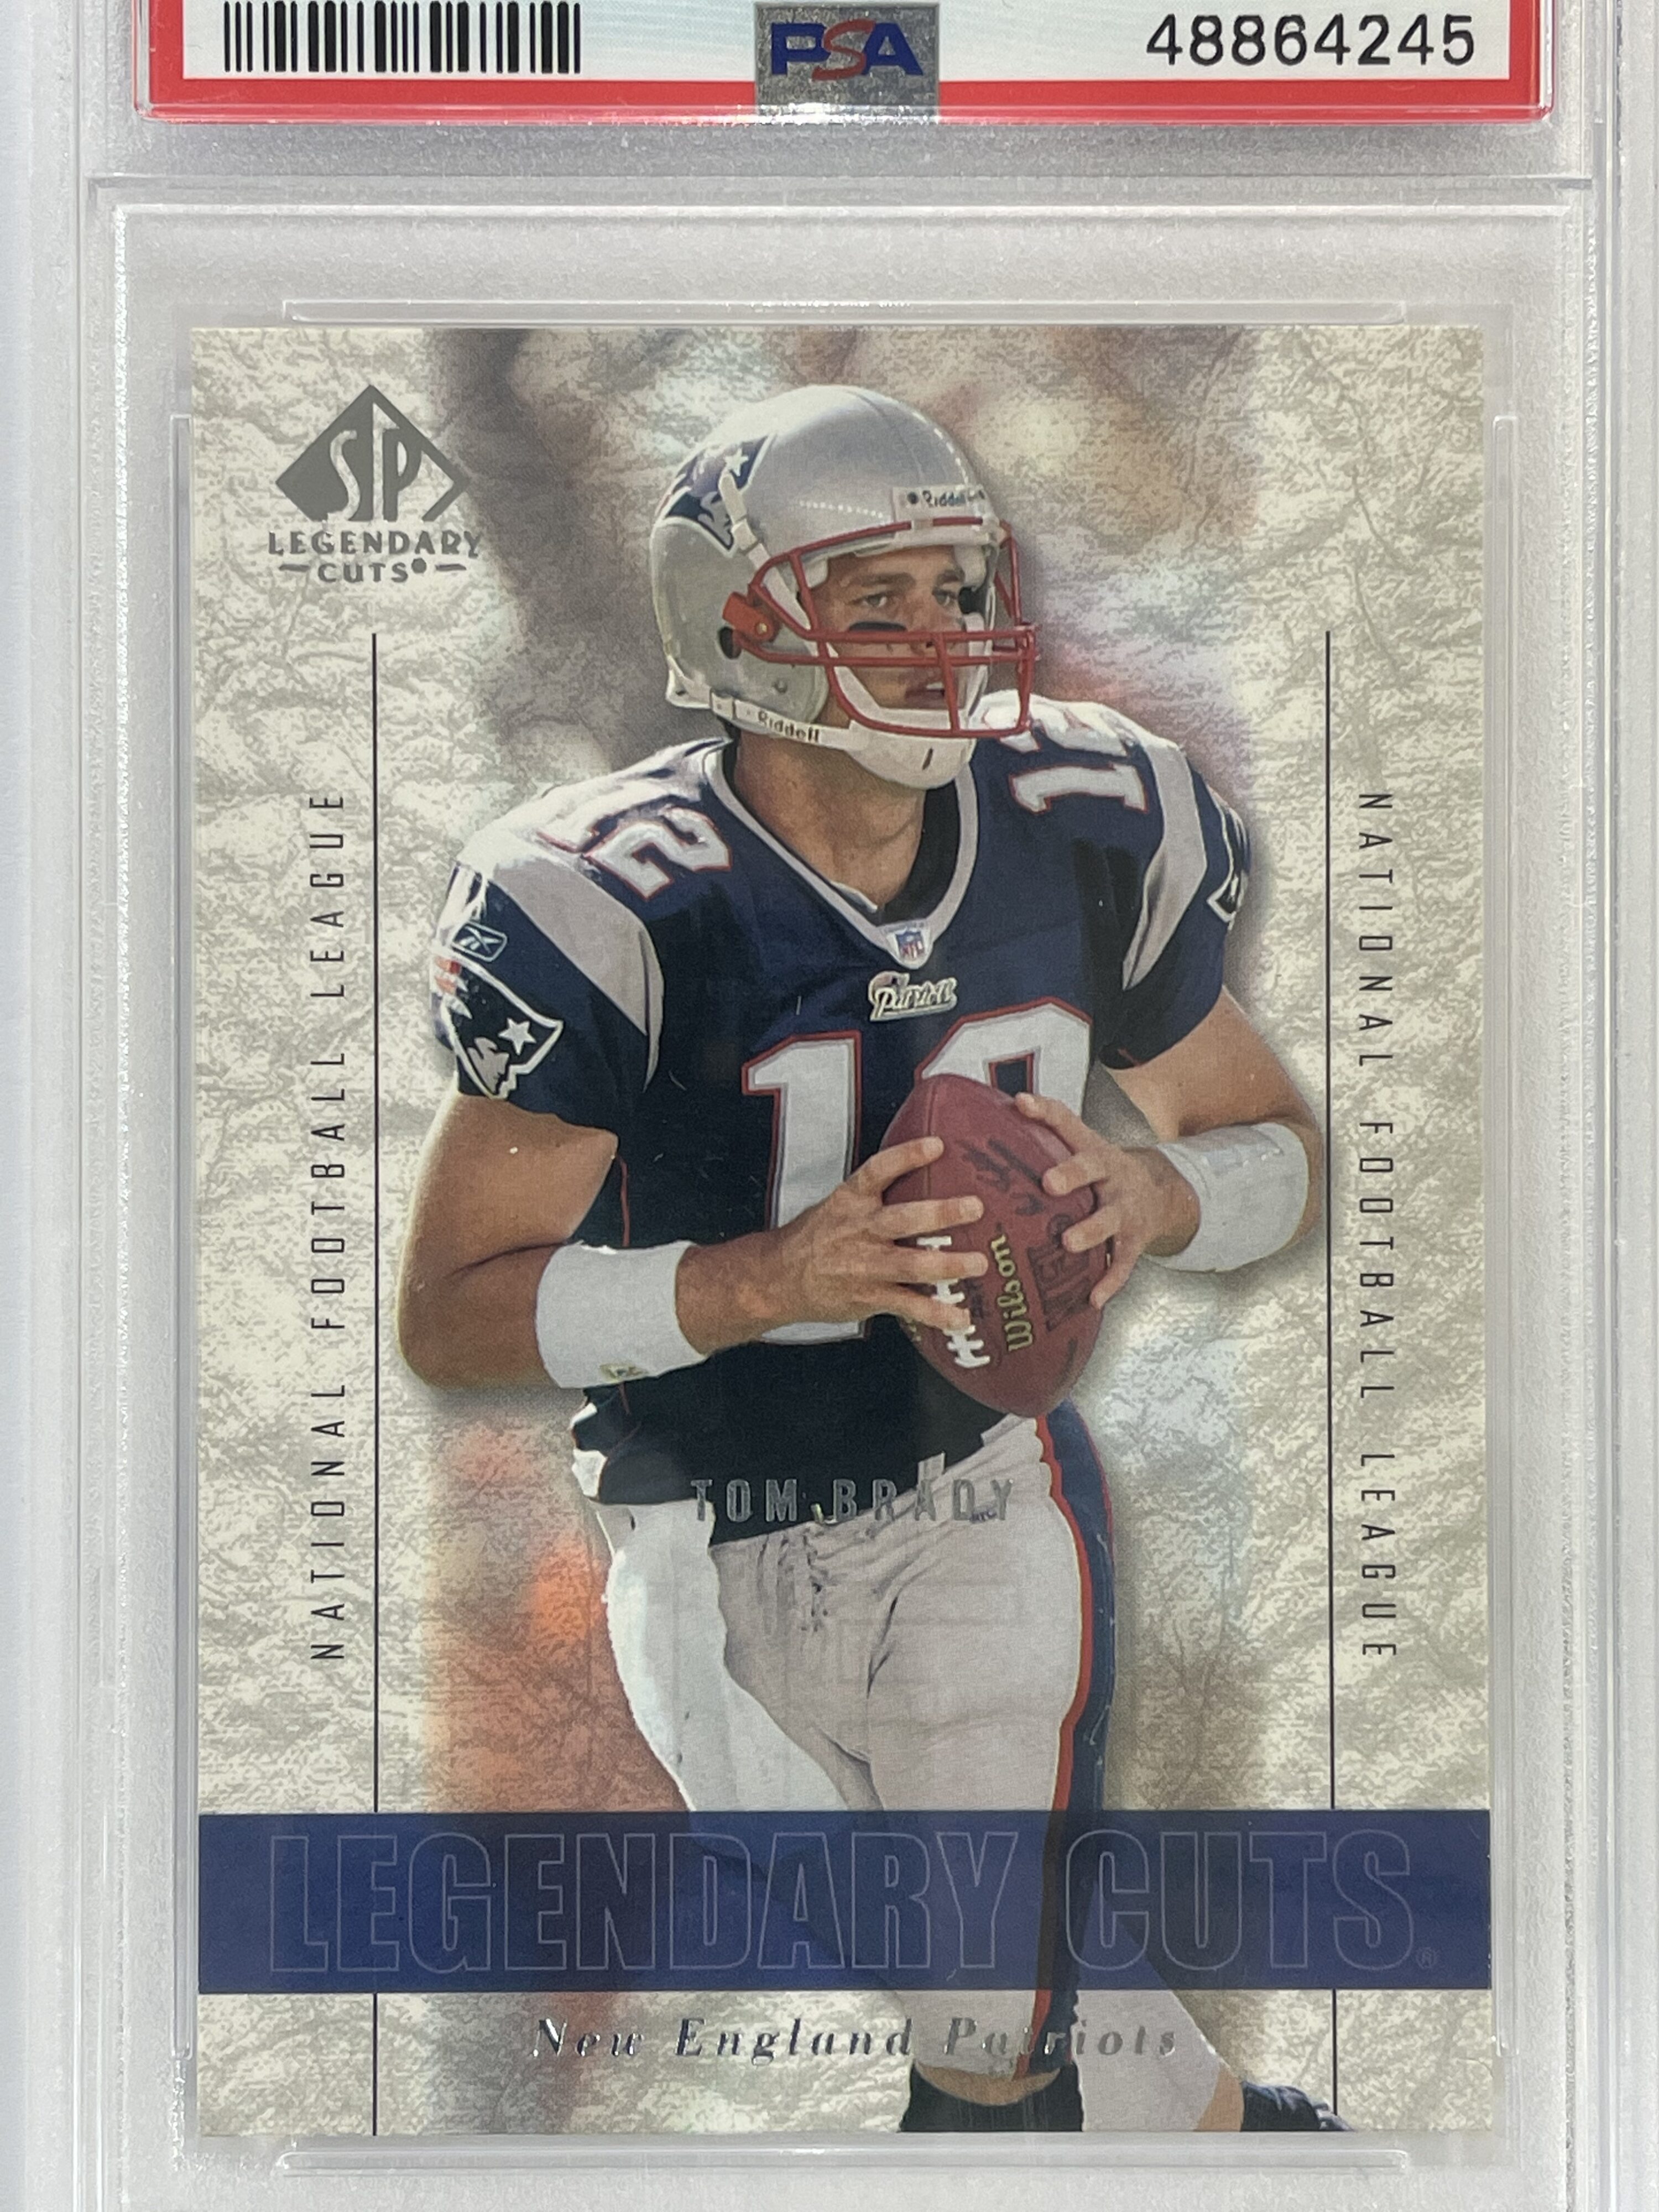 2002 SP Legendary Cuts /2500 Tom Brady #91 